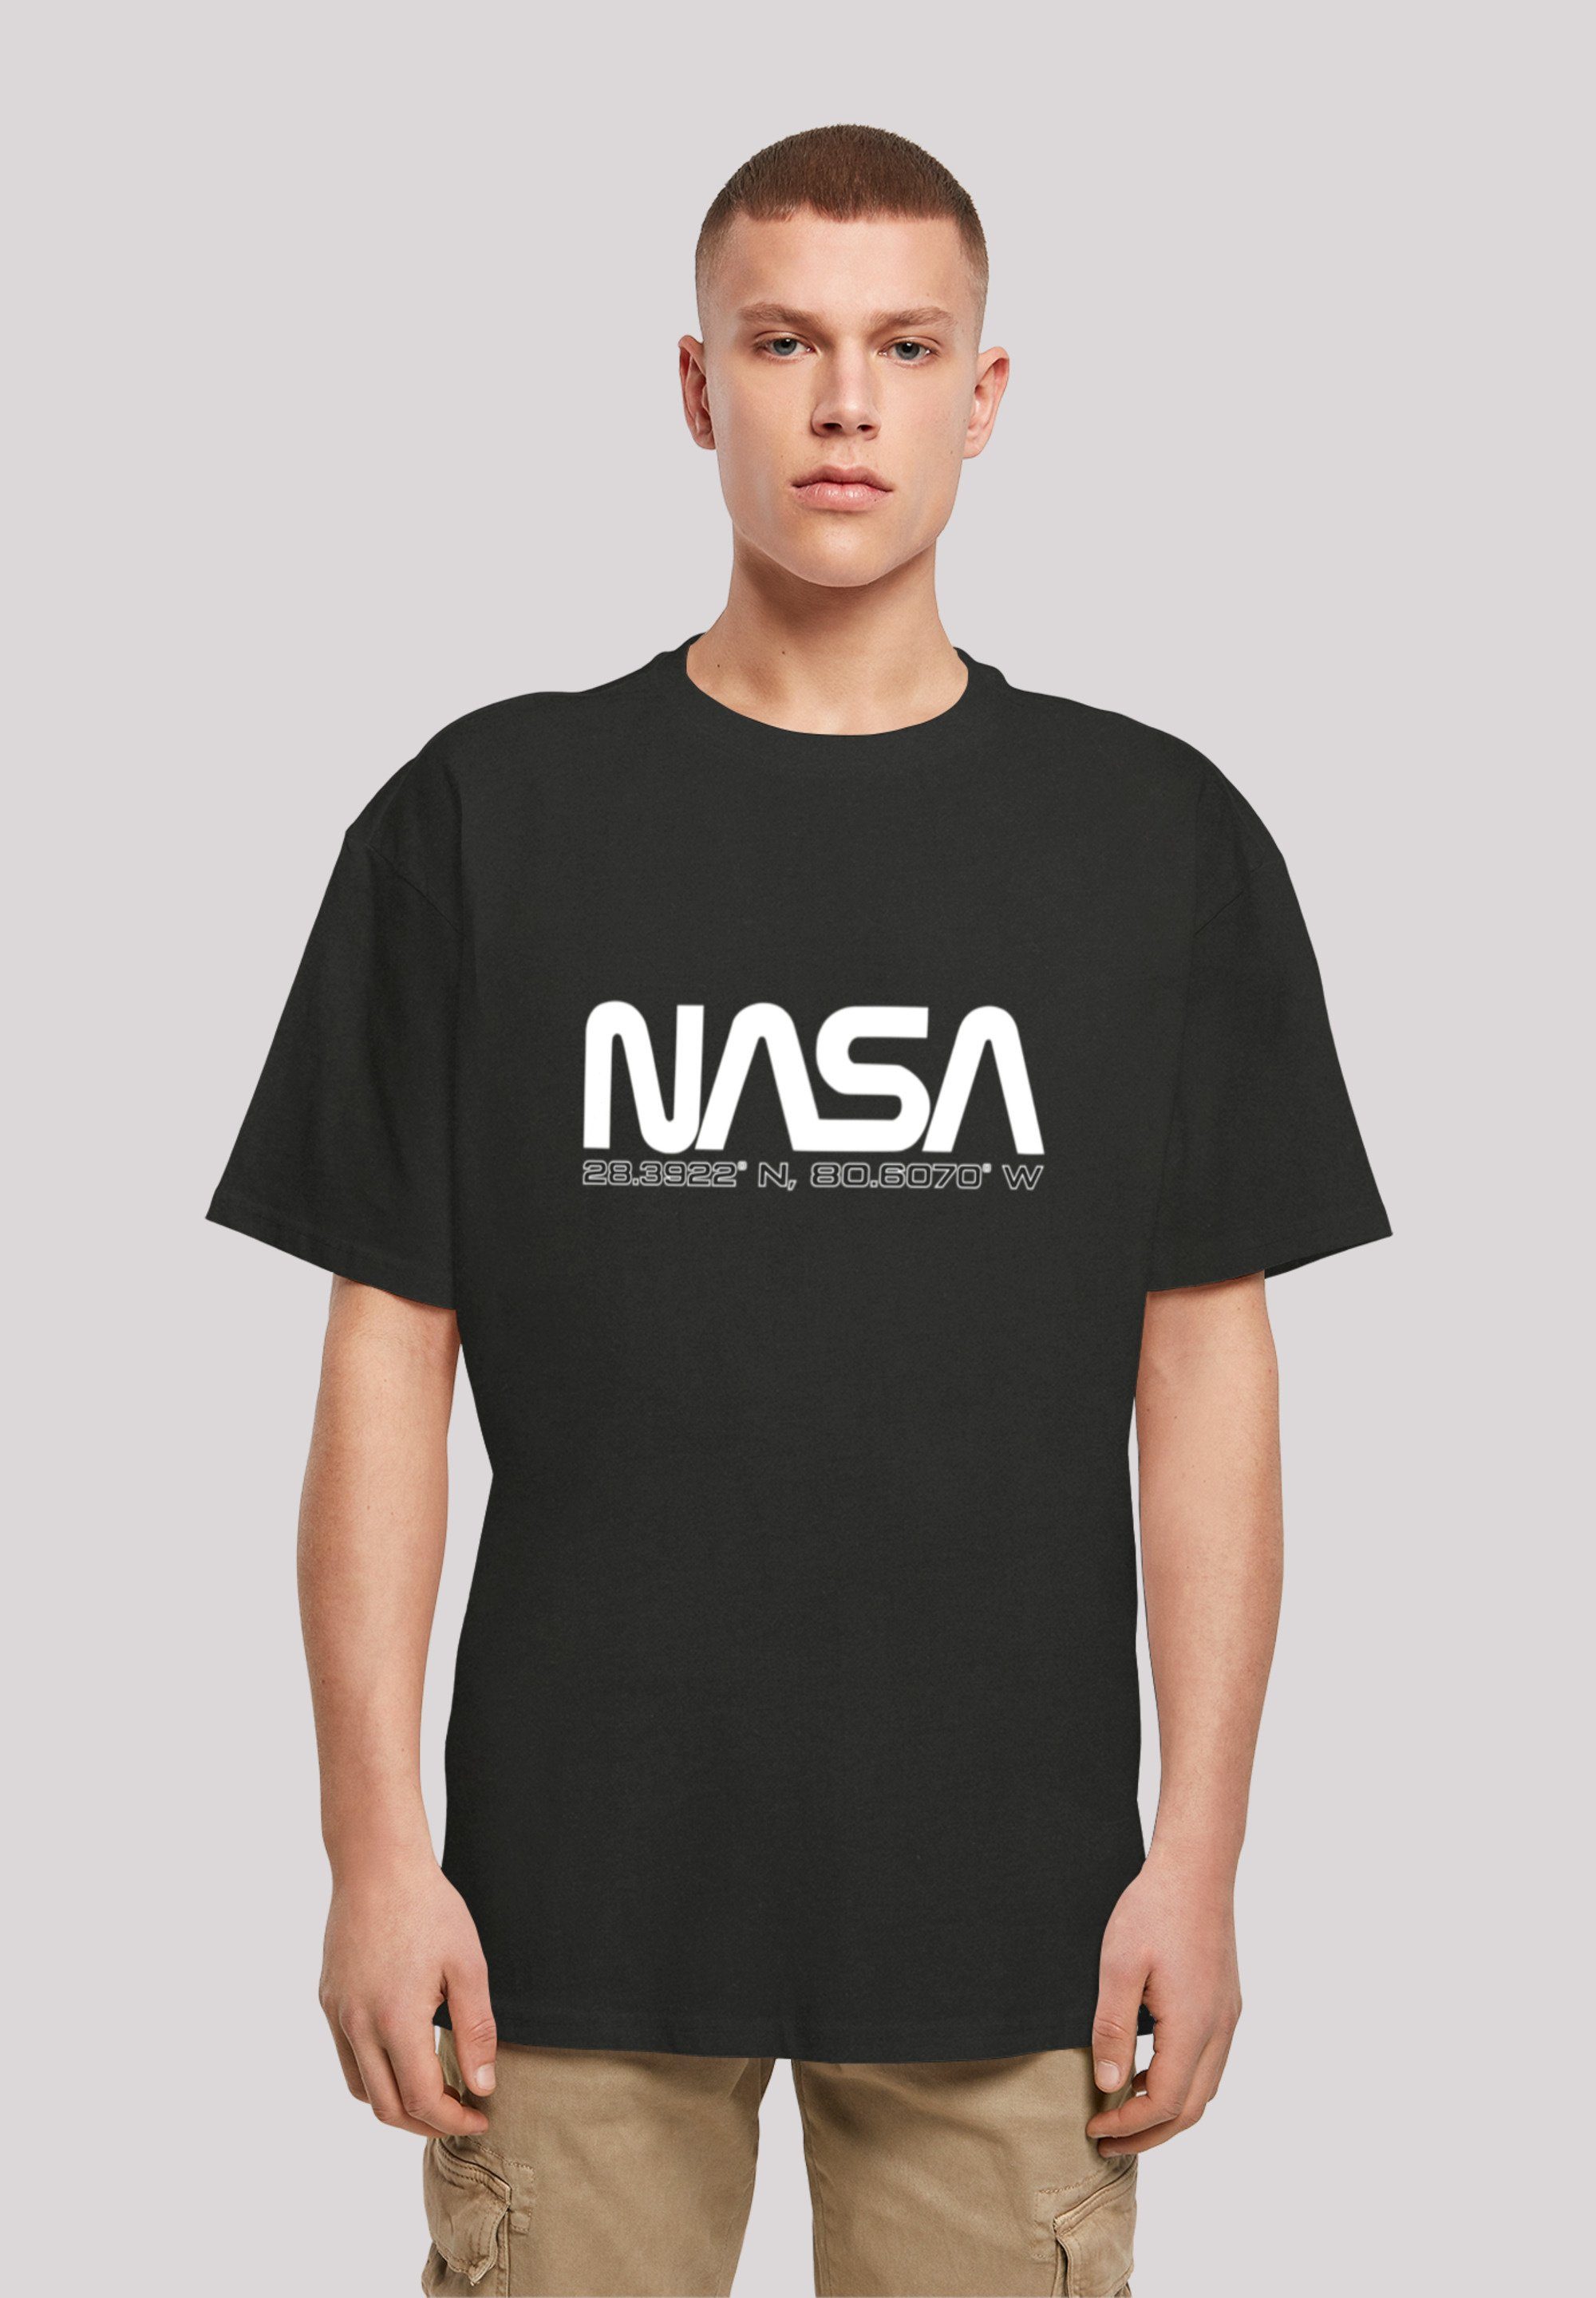 F4NT4STIC T-Shirt worm Print schwarz NASA